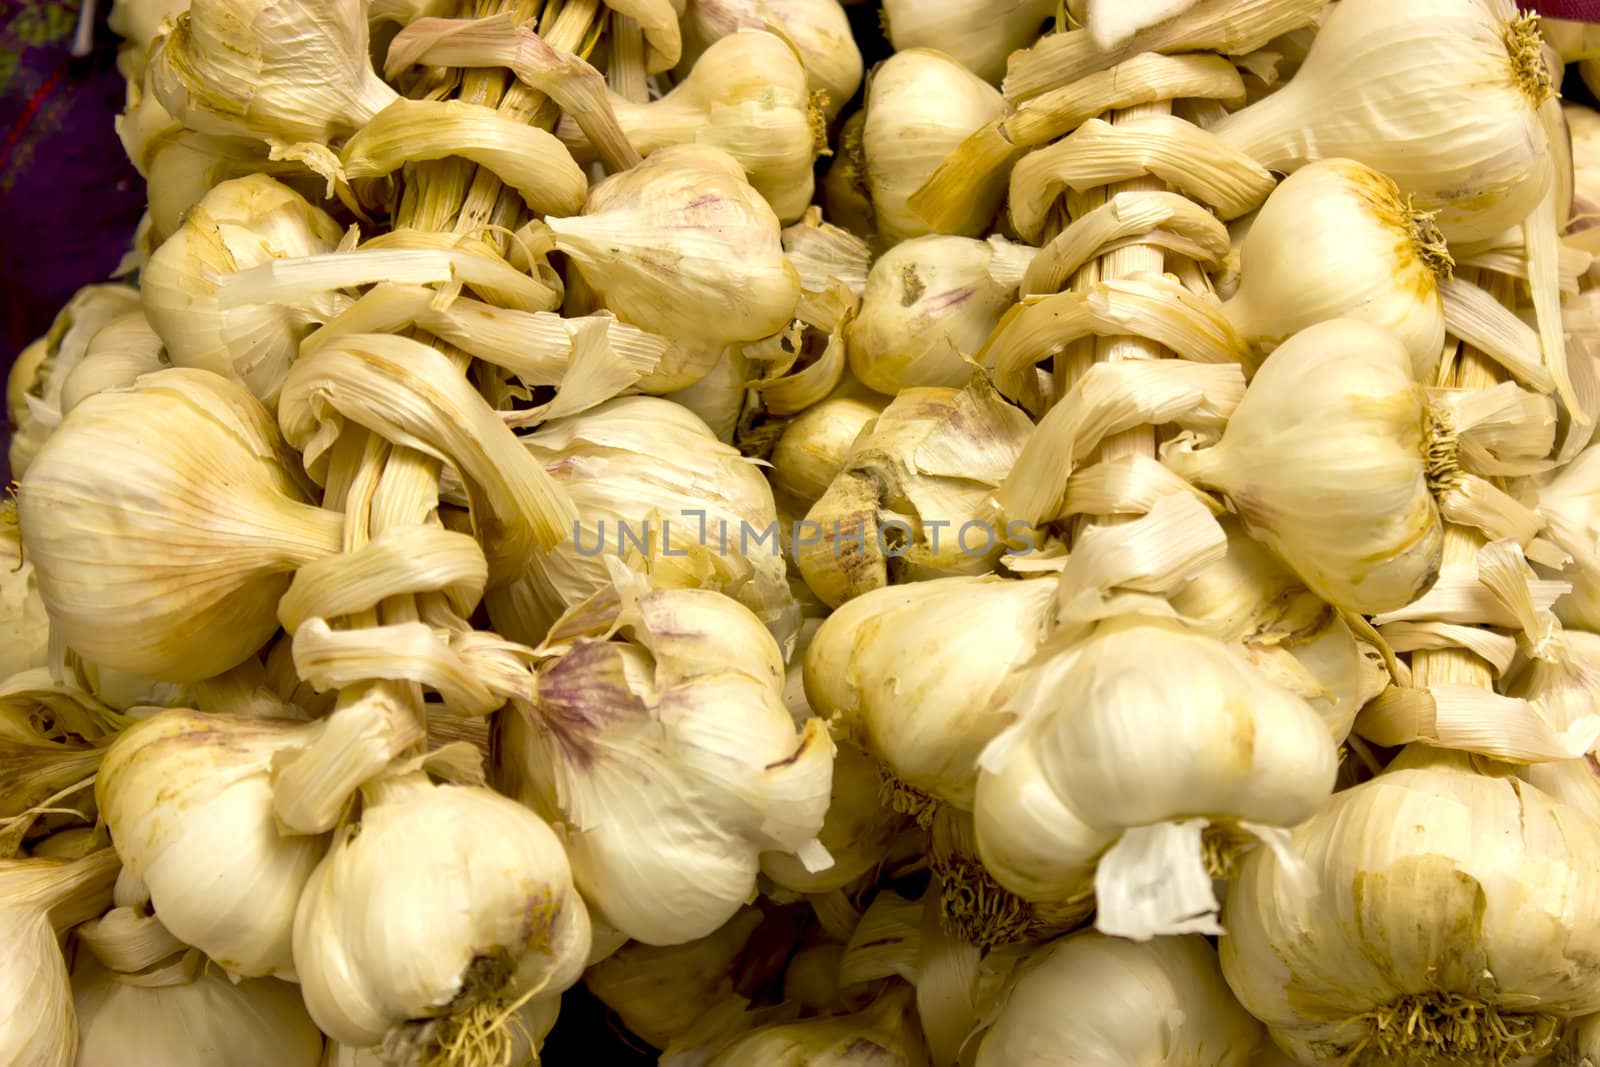 A bunch of garlic bulbs at the public market.